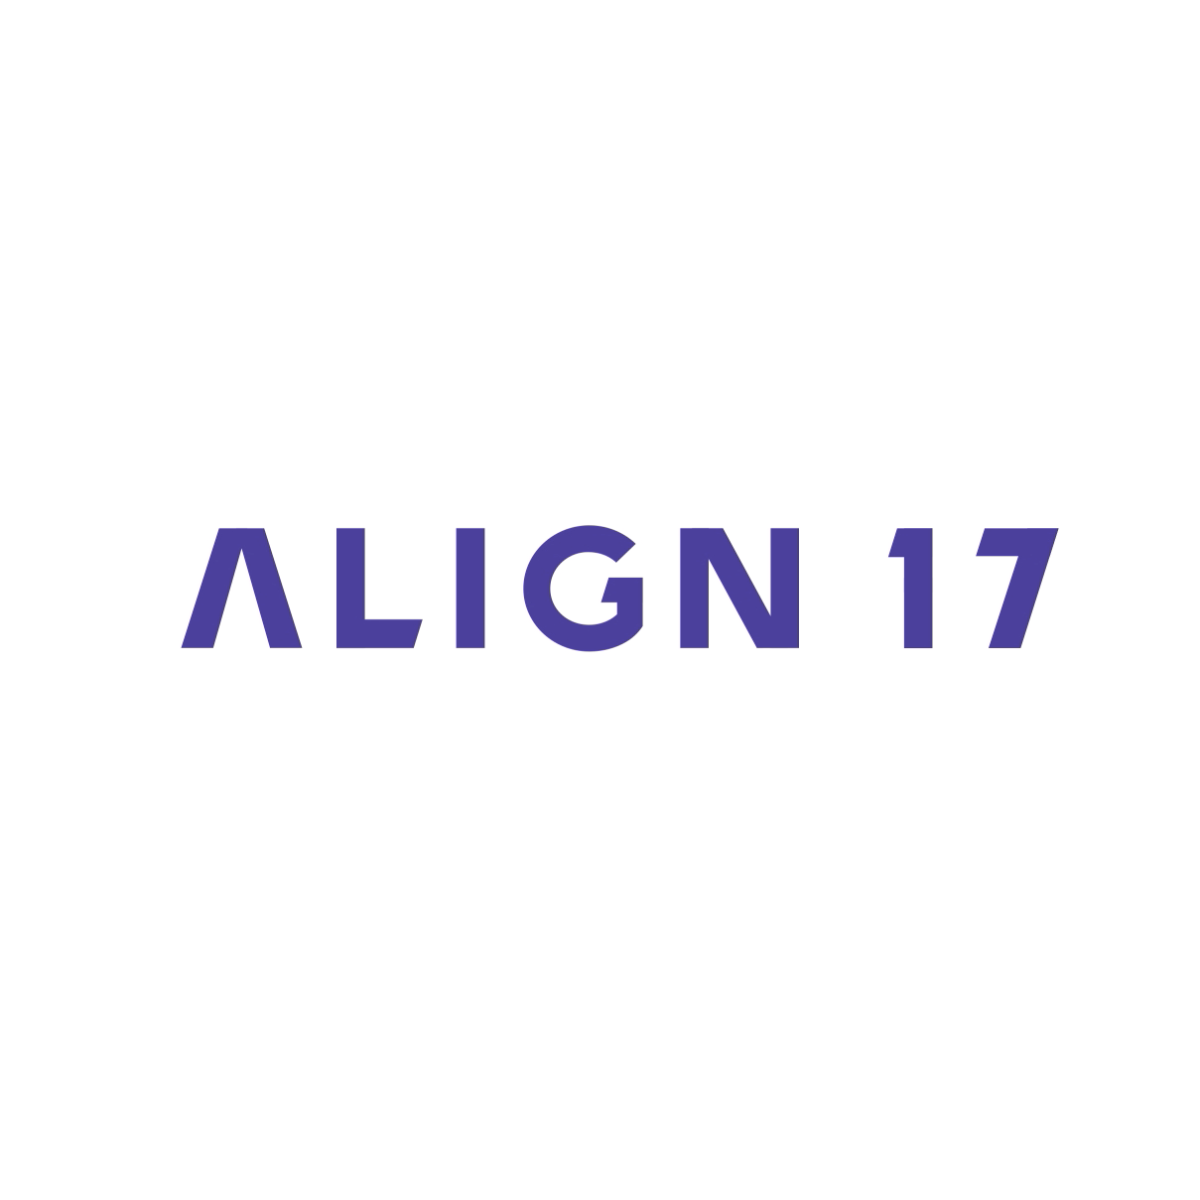 Align17